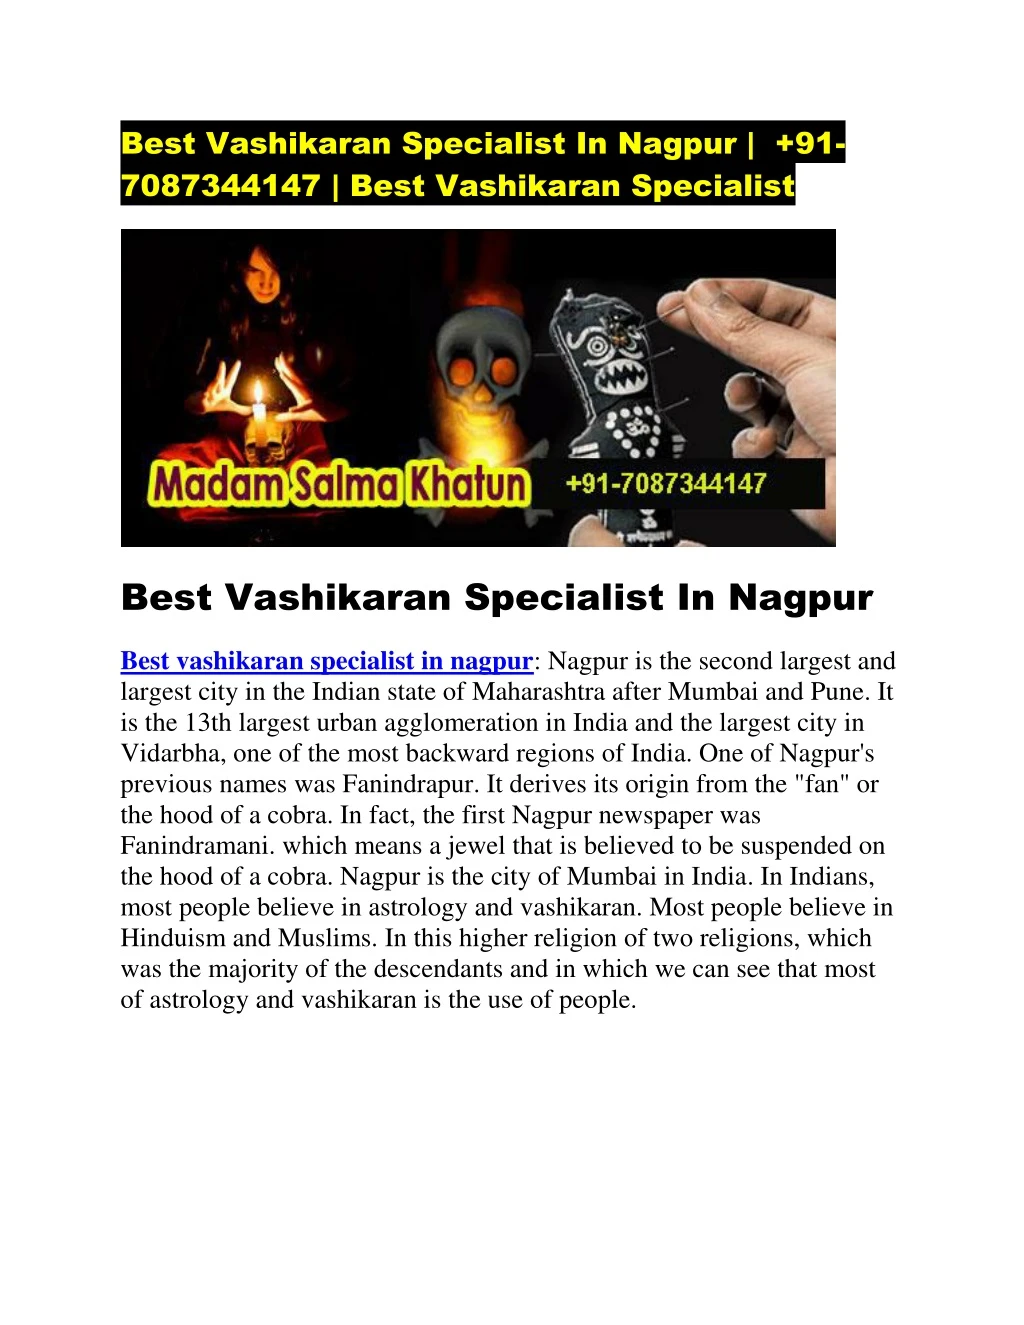 best vashikaran specialist in nagpur